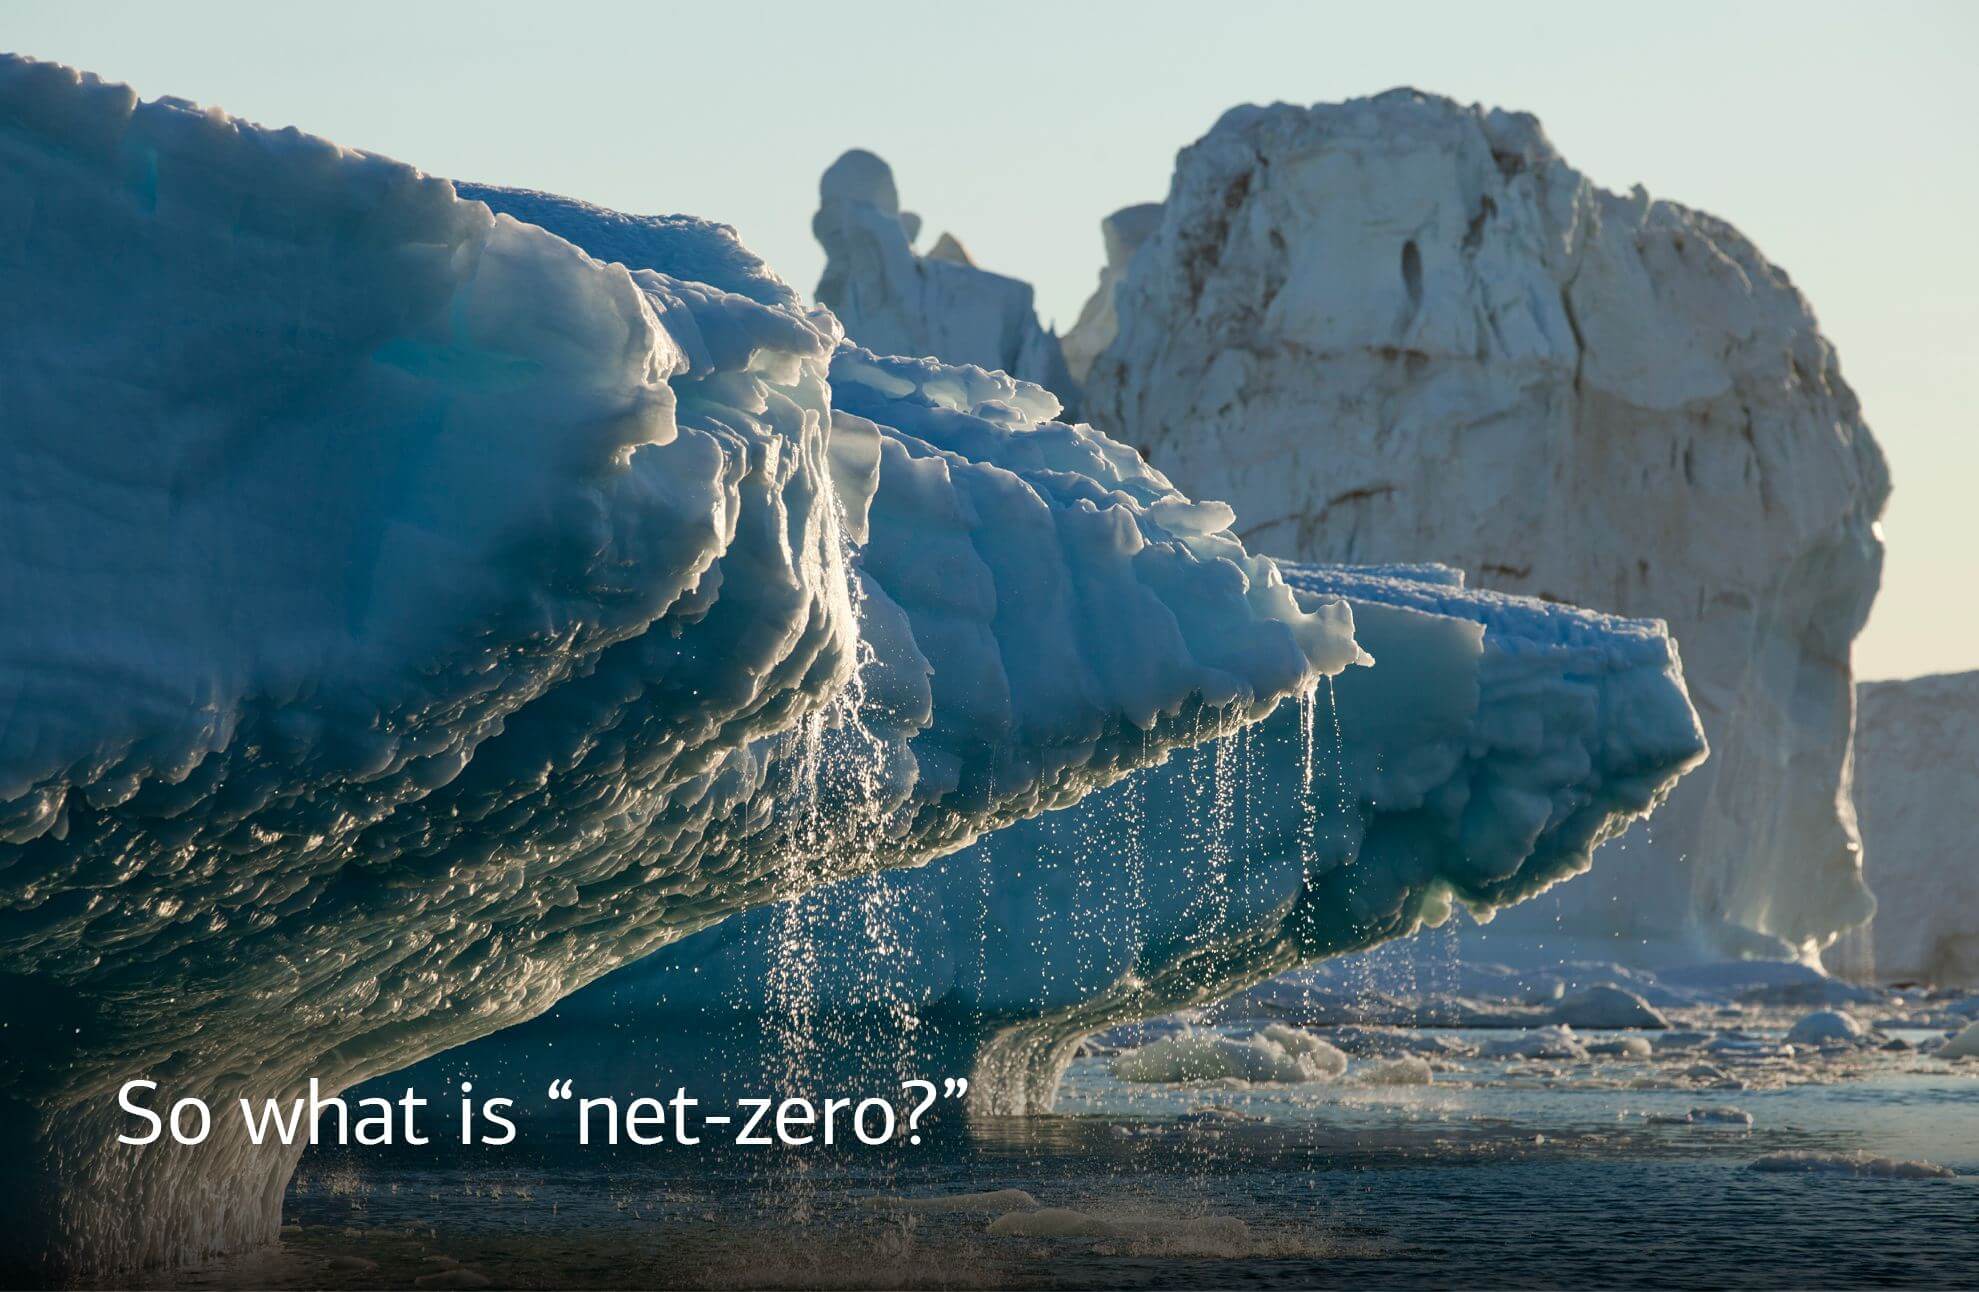 So what is “net zero?”